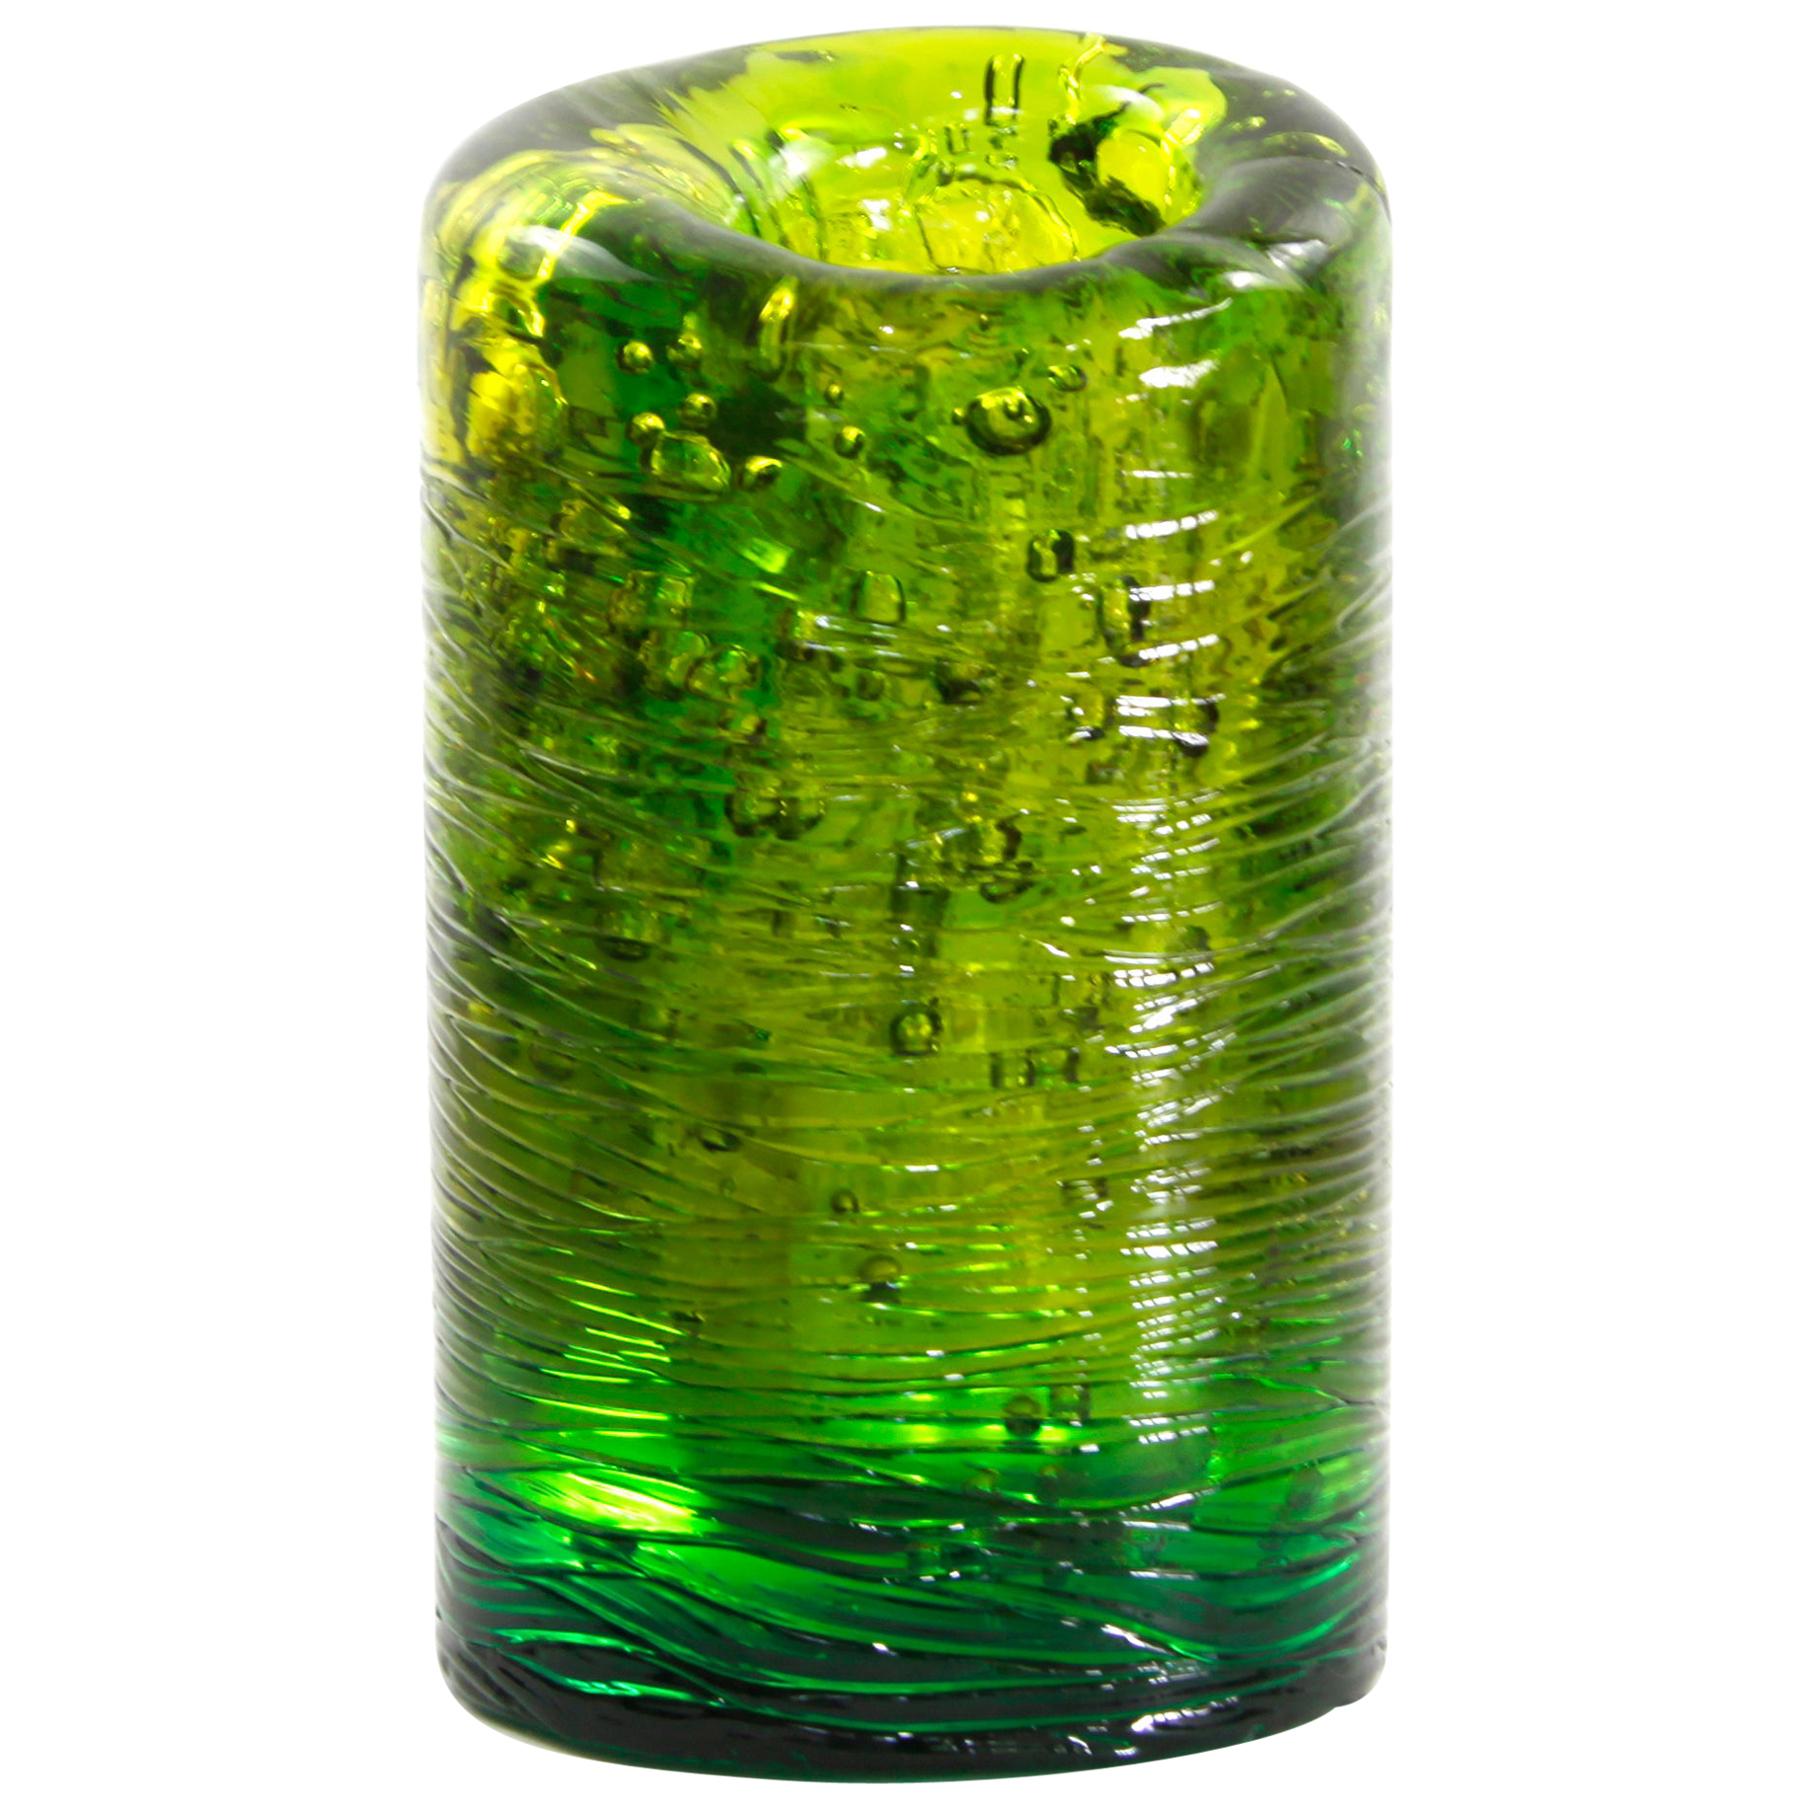 Jungle Contemporary Vase, Large, in Monochrome Lime Green by Jacopo Foggini For Sale